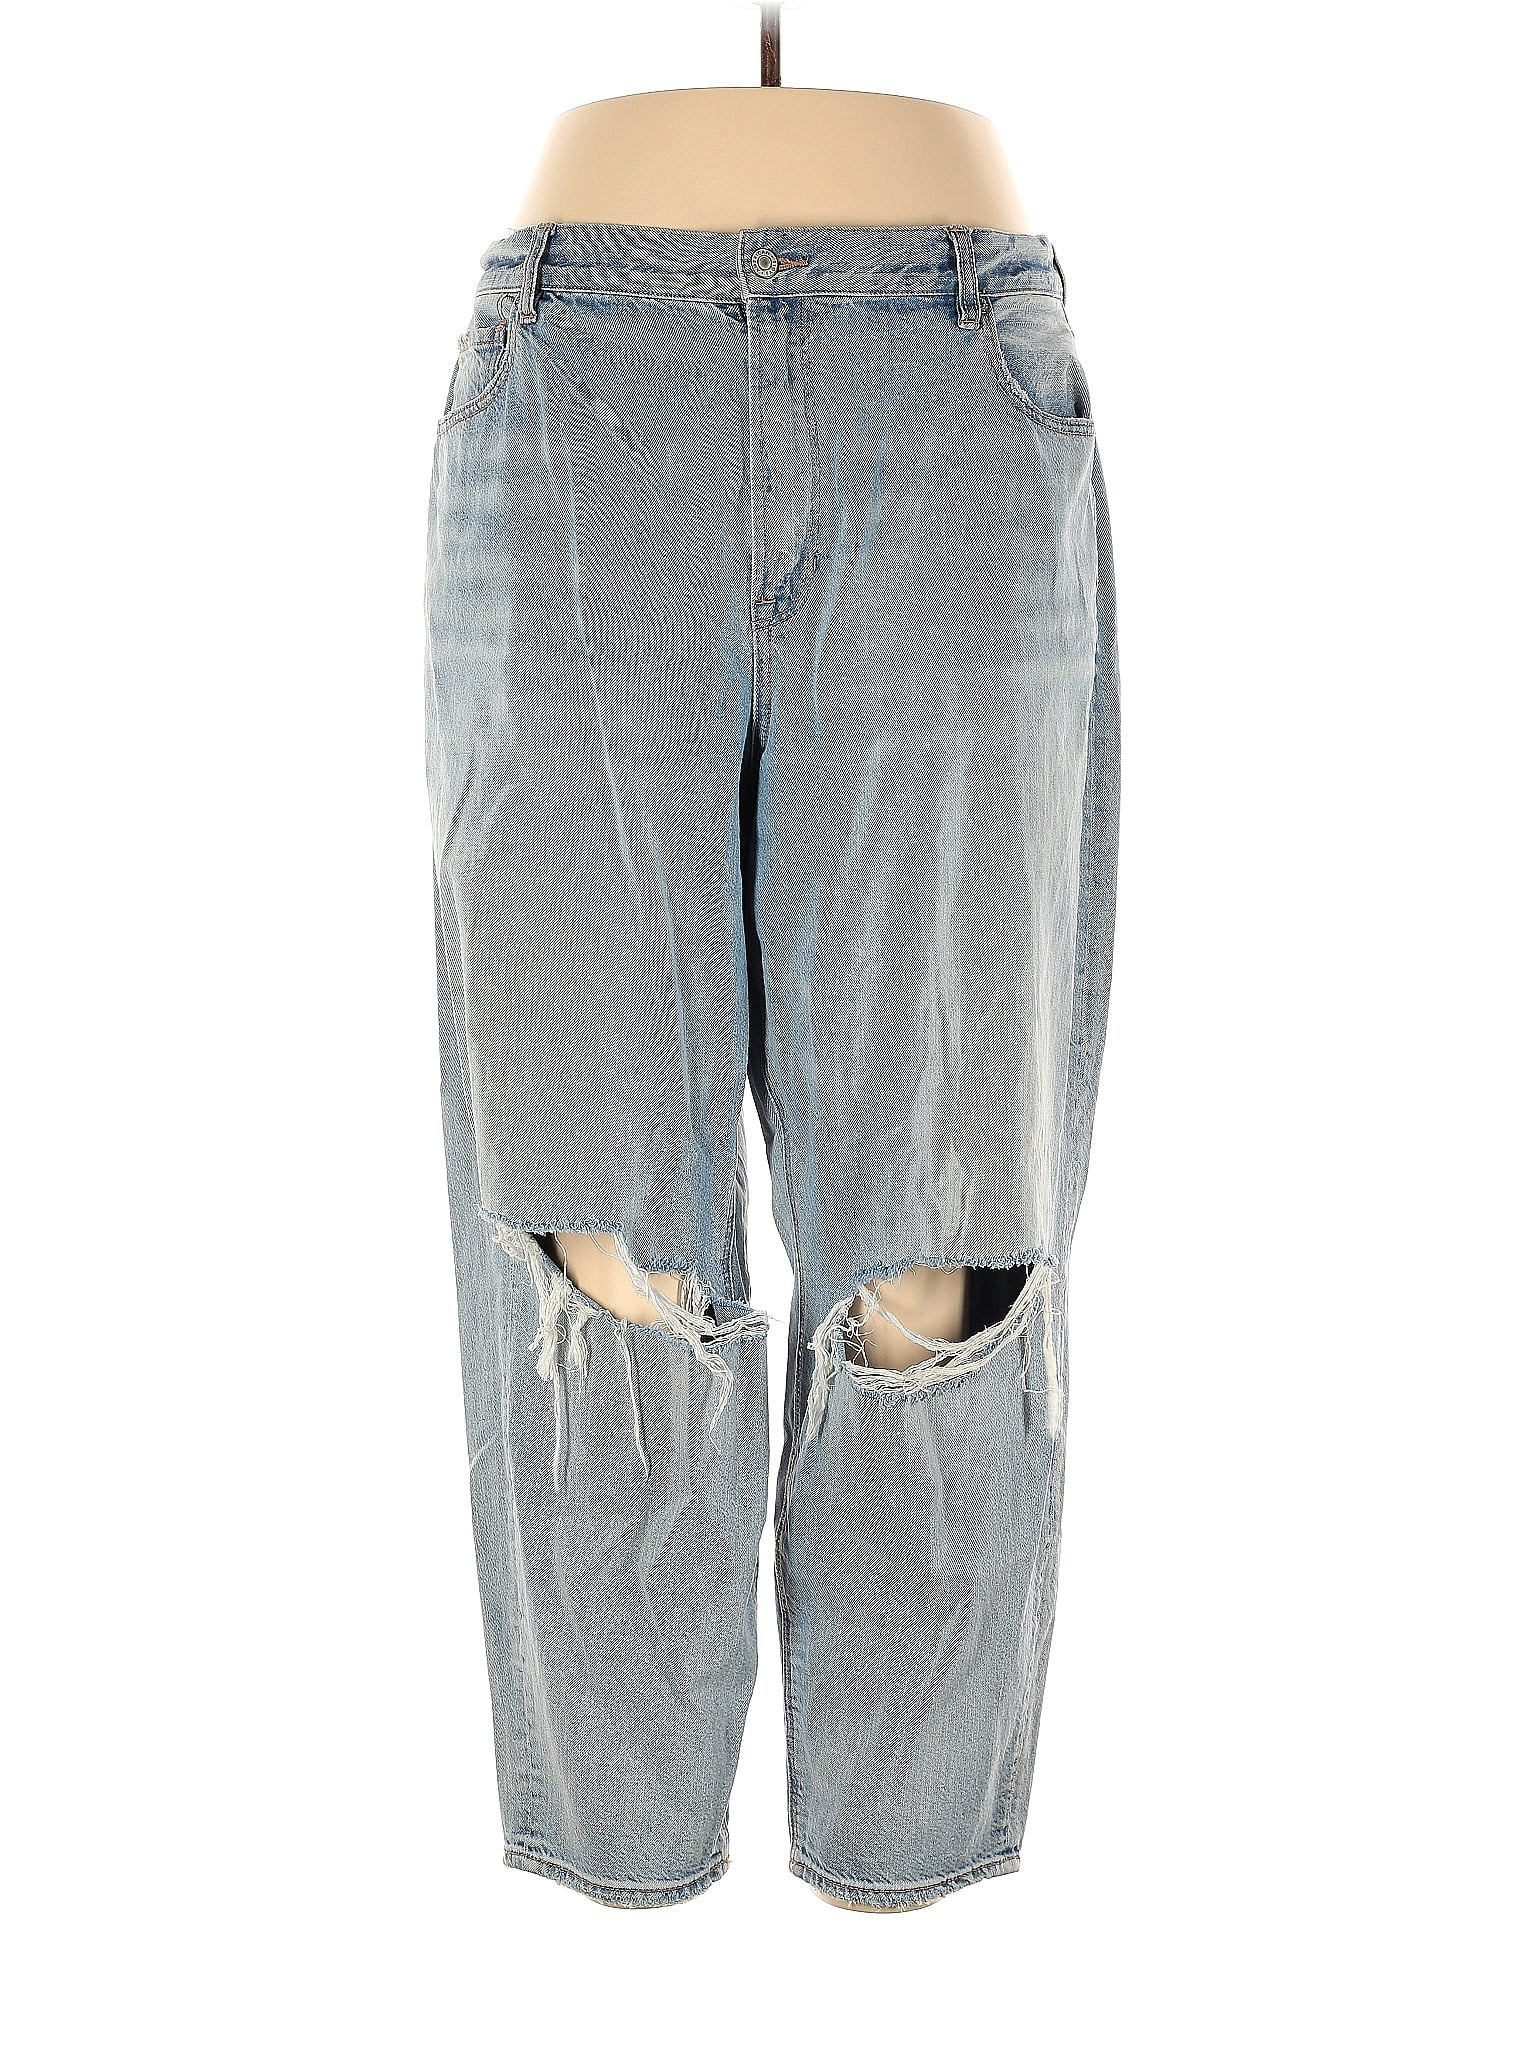 Aeropostale 100% Cotton Graphic Gray Sweatpants Size XS - 62% off